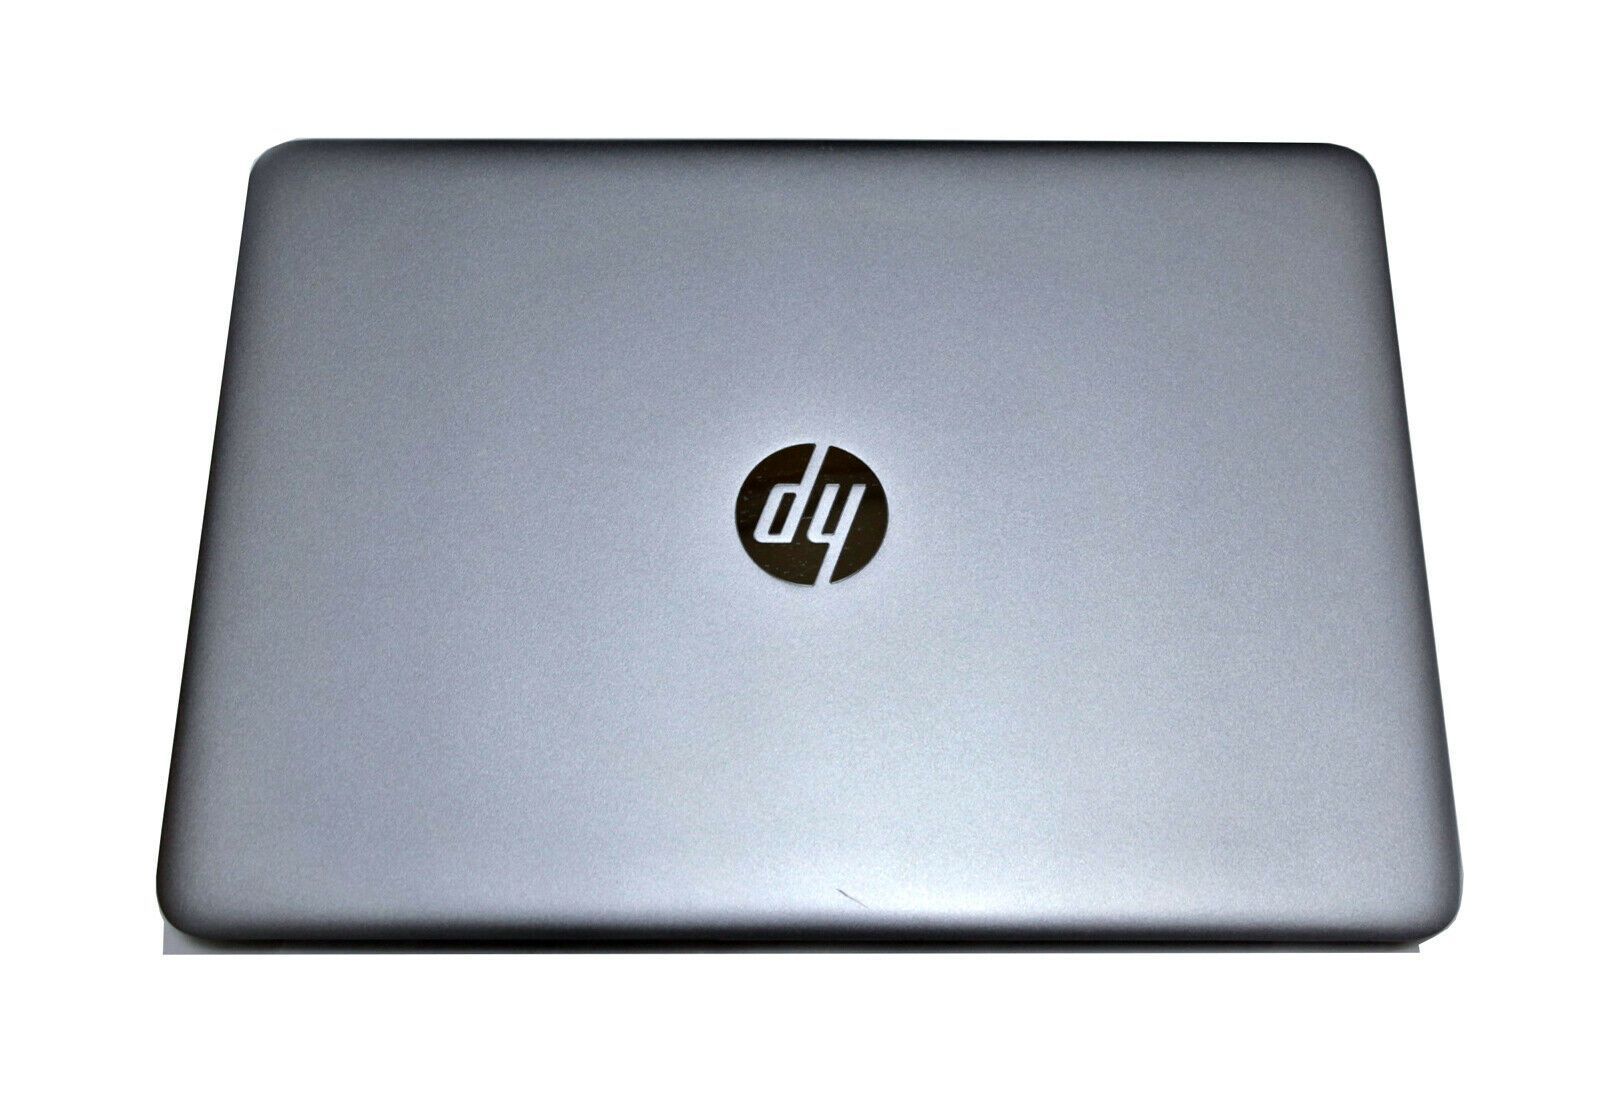 HP EliteBook 840 G3 FHD UltraBook: 512GB SSD, 8GB RAM, 2020 Warranty - CruiseTech